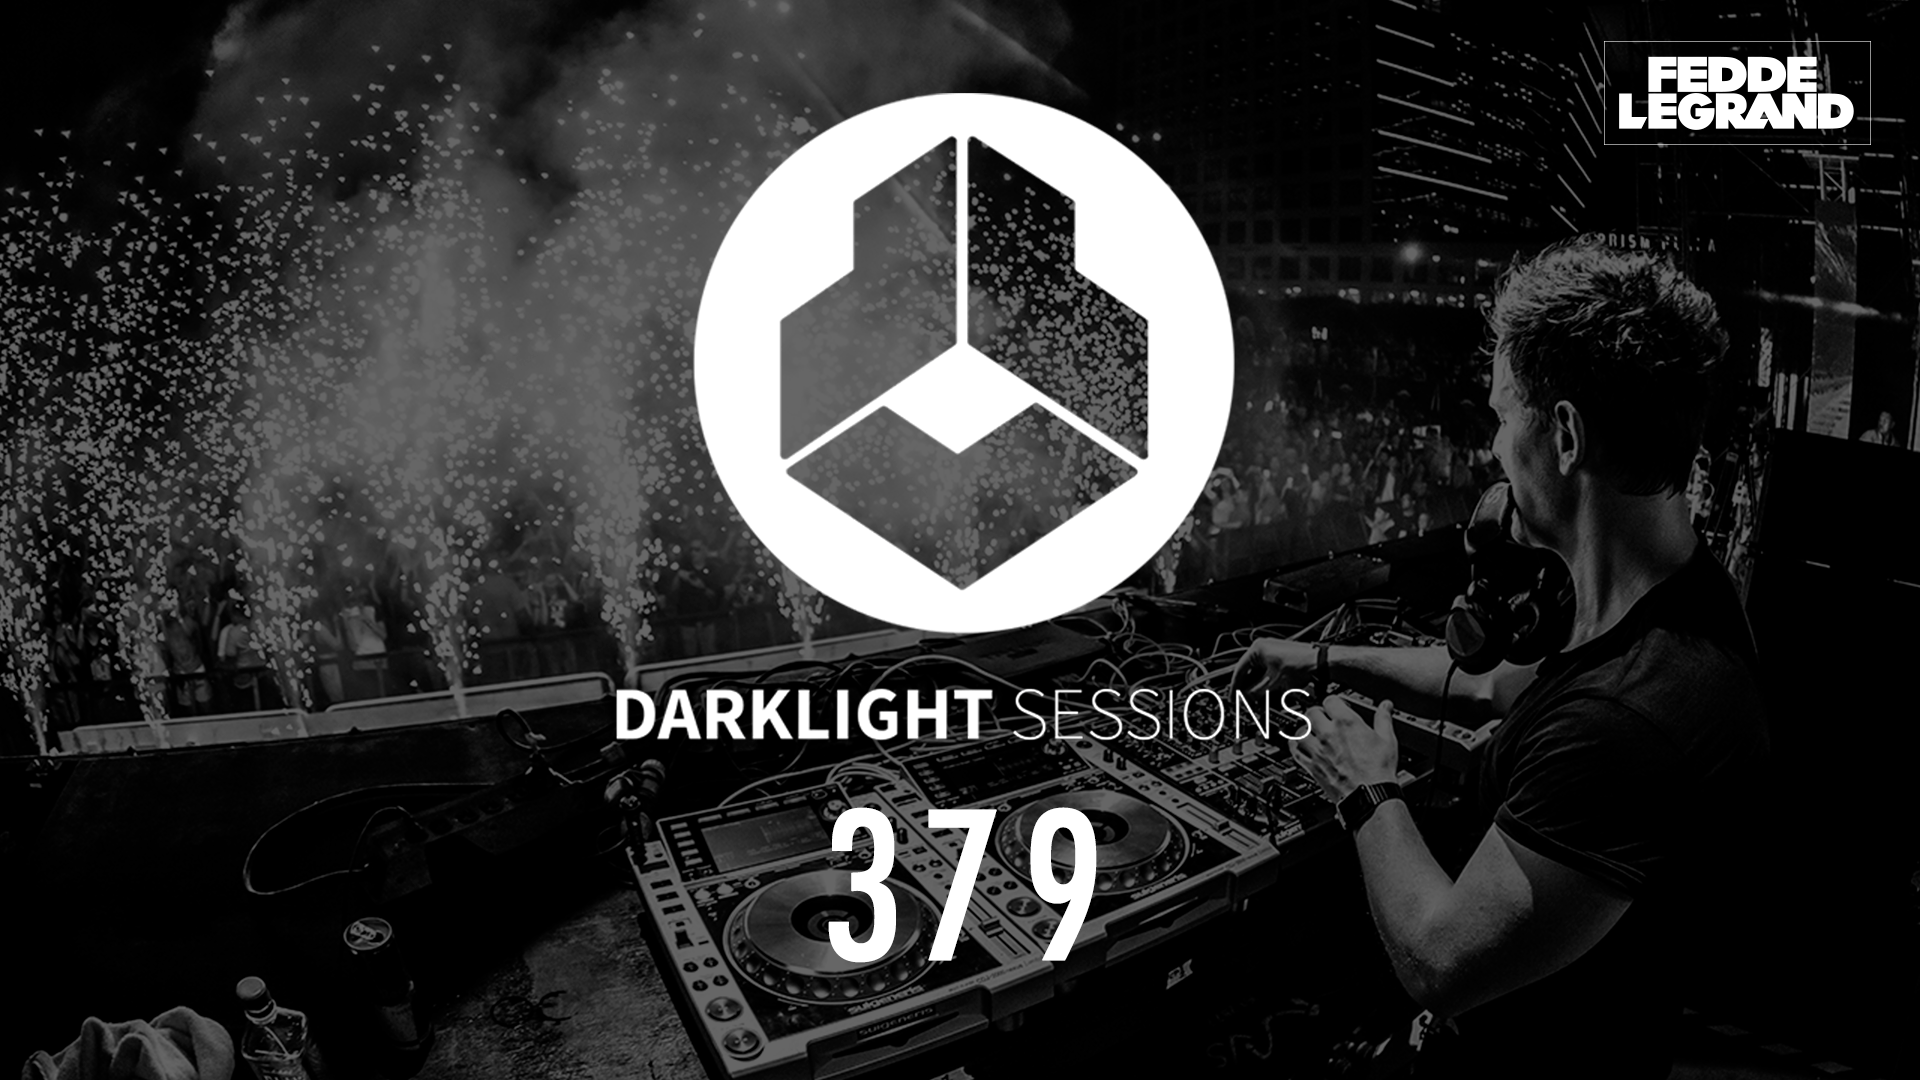 Darklight Sessions 379